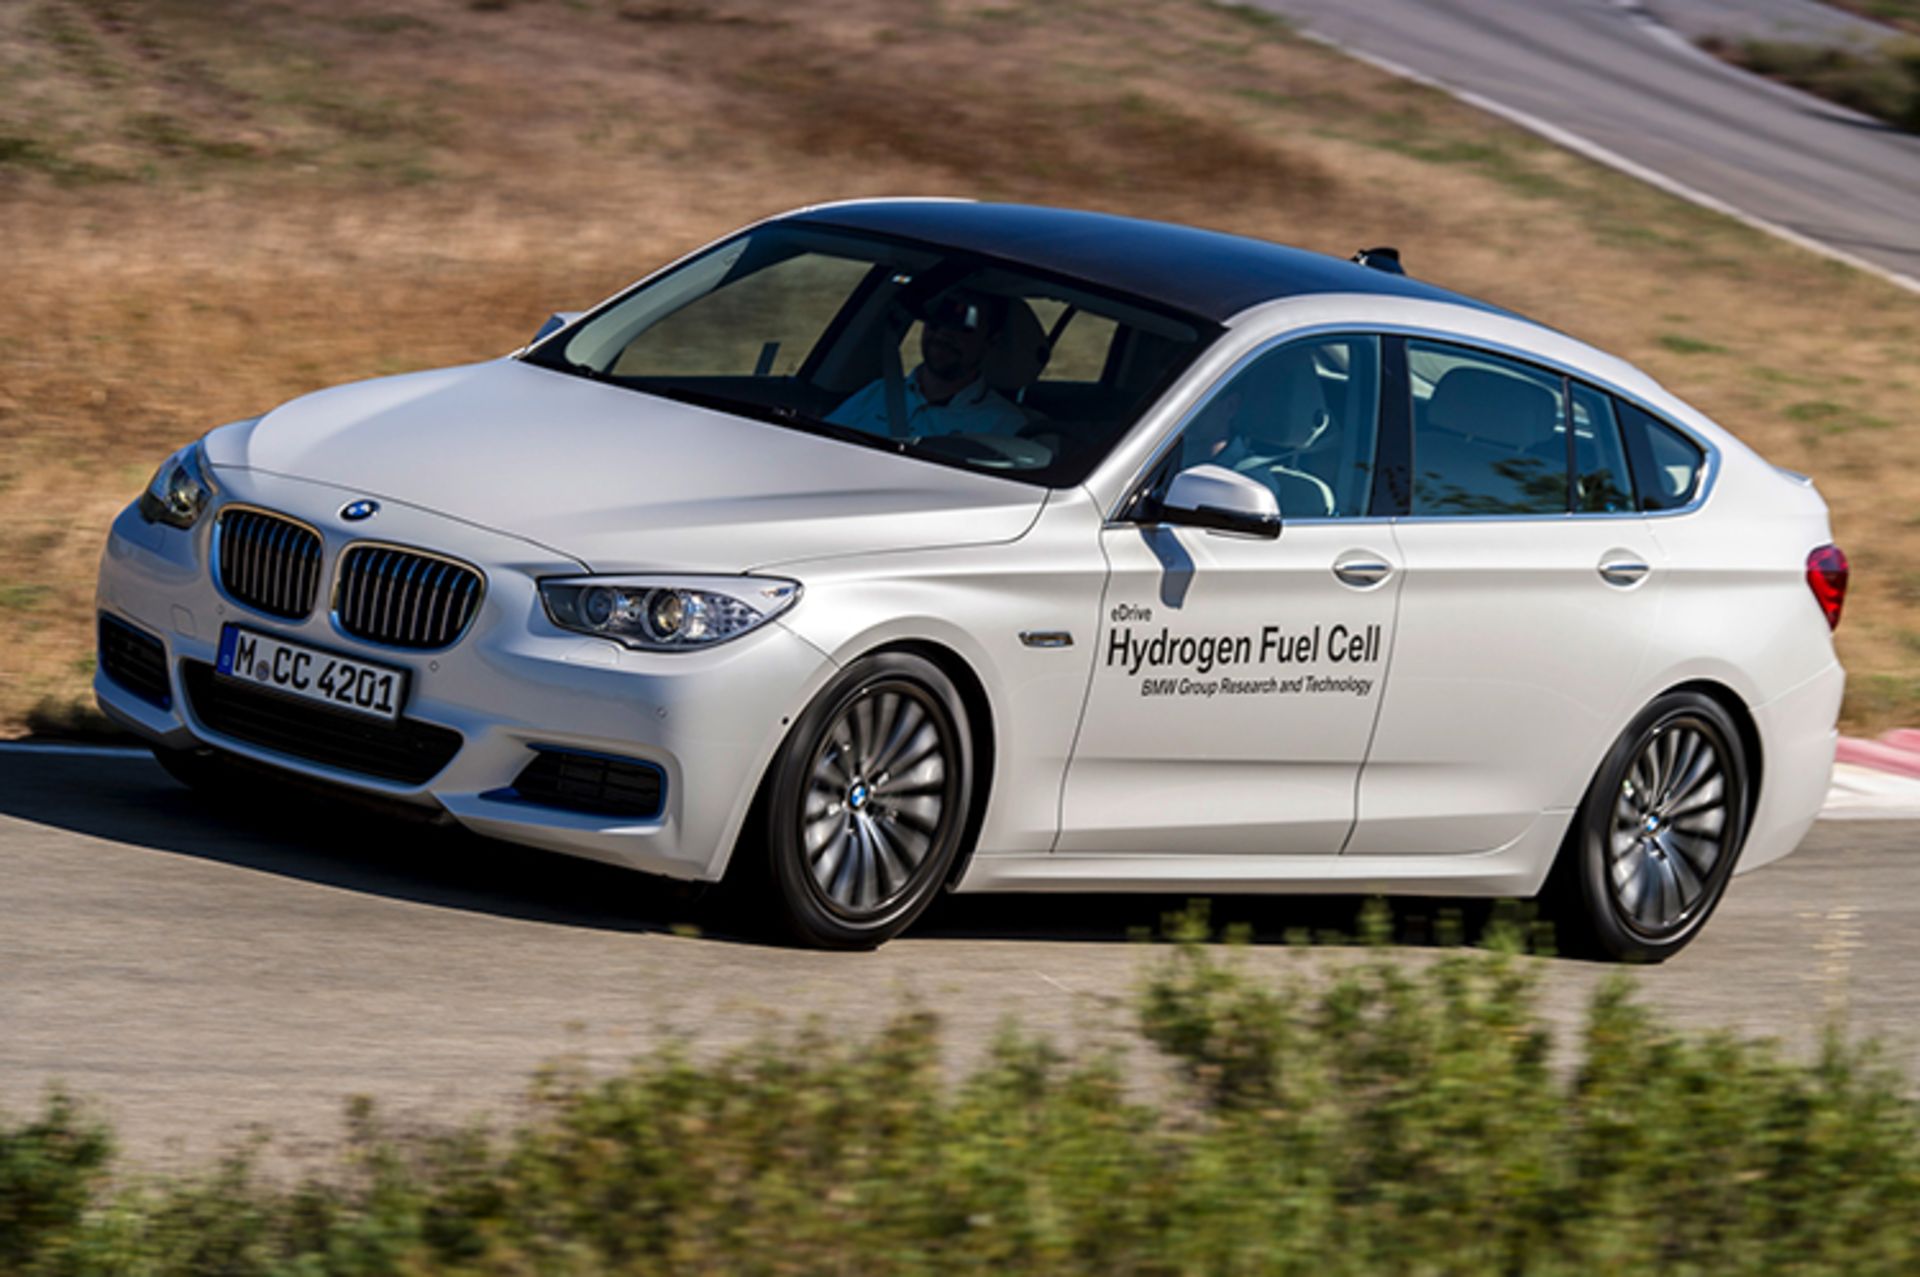 BMW 5 series gt hydrogen fuel cell 